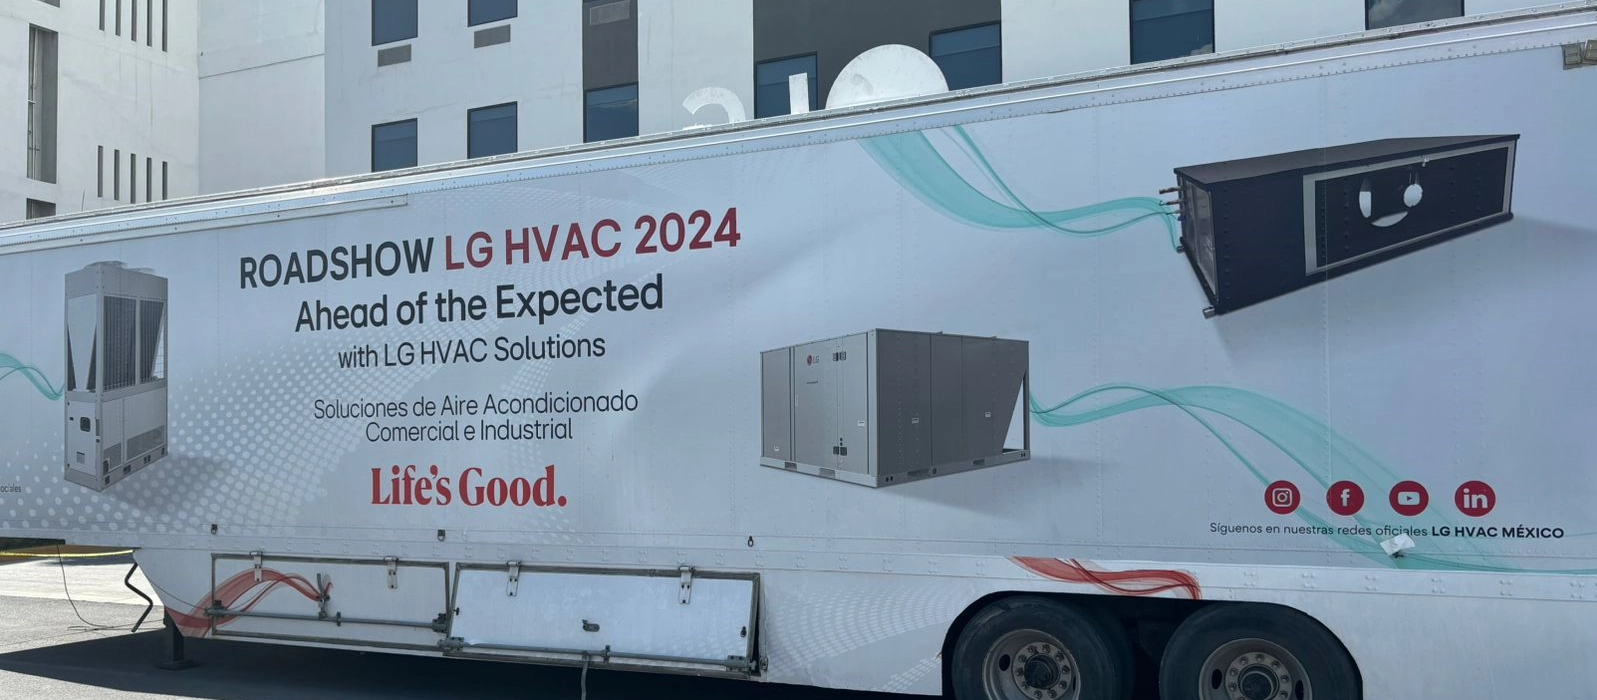 Camion RoadShow LG HVAC 2024